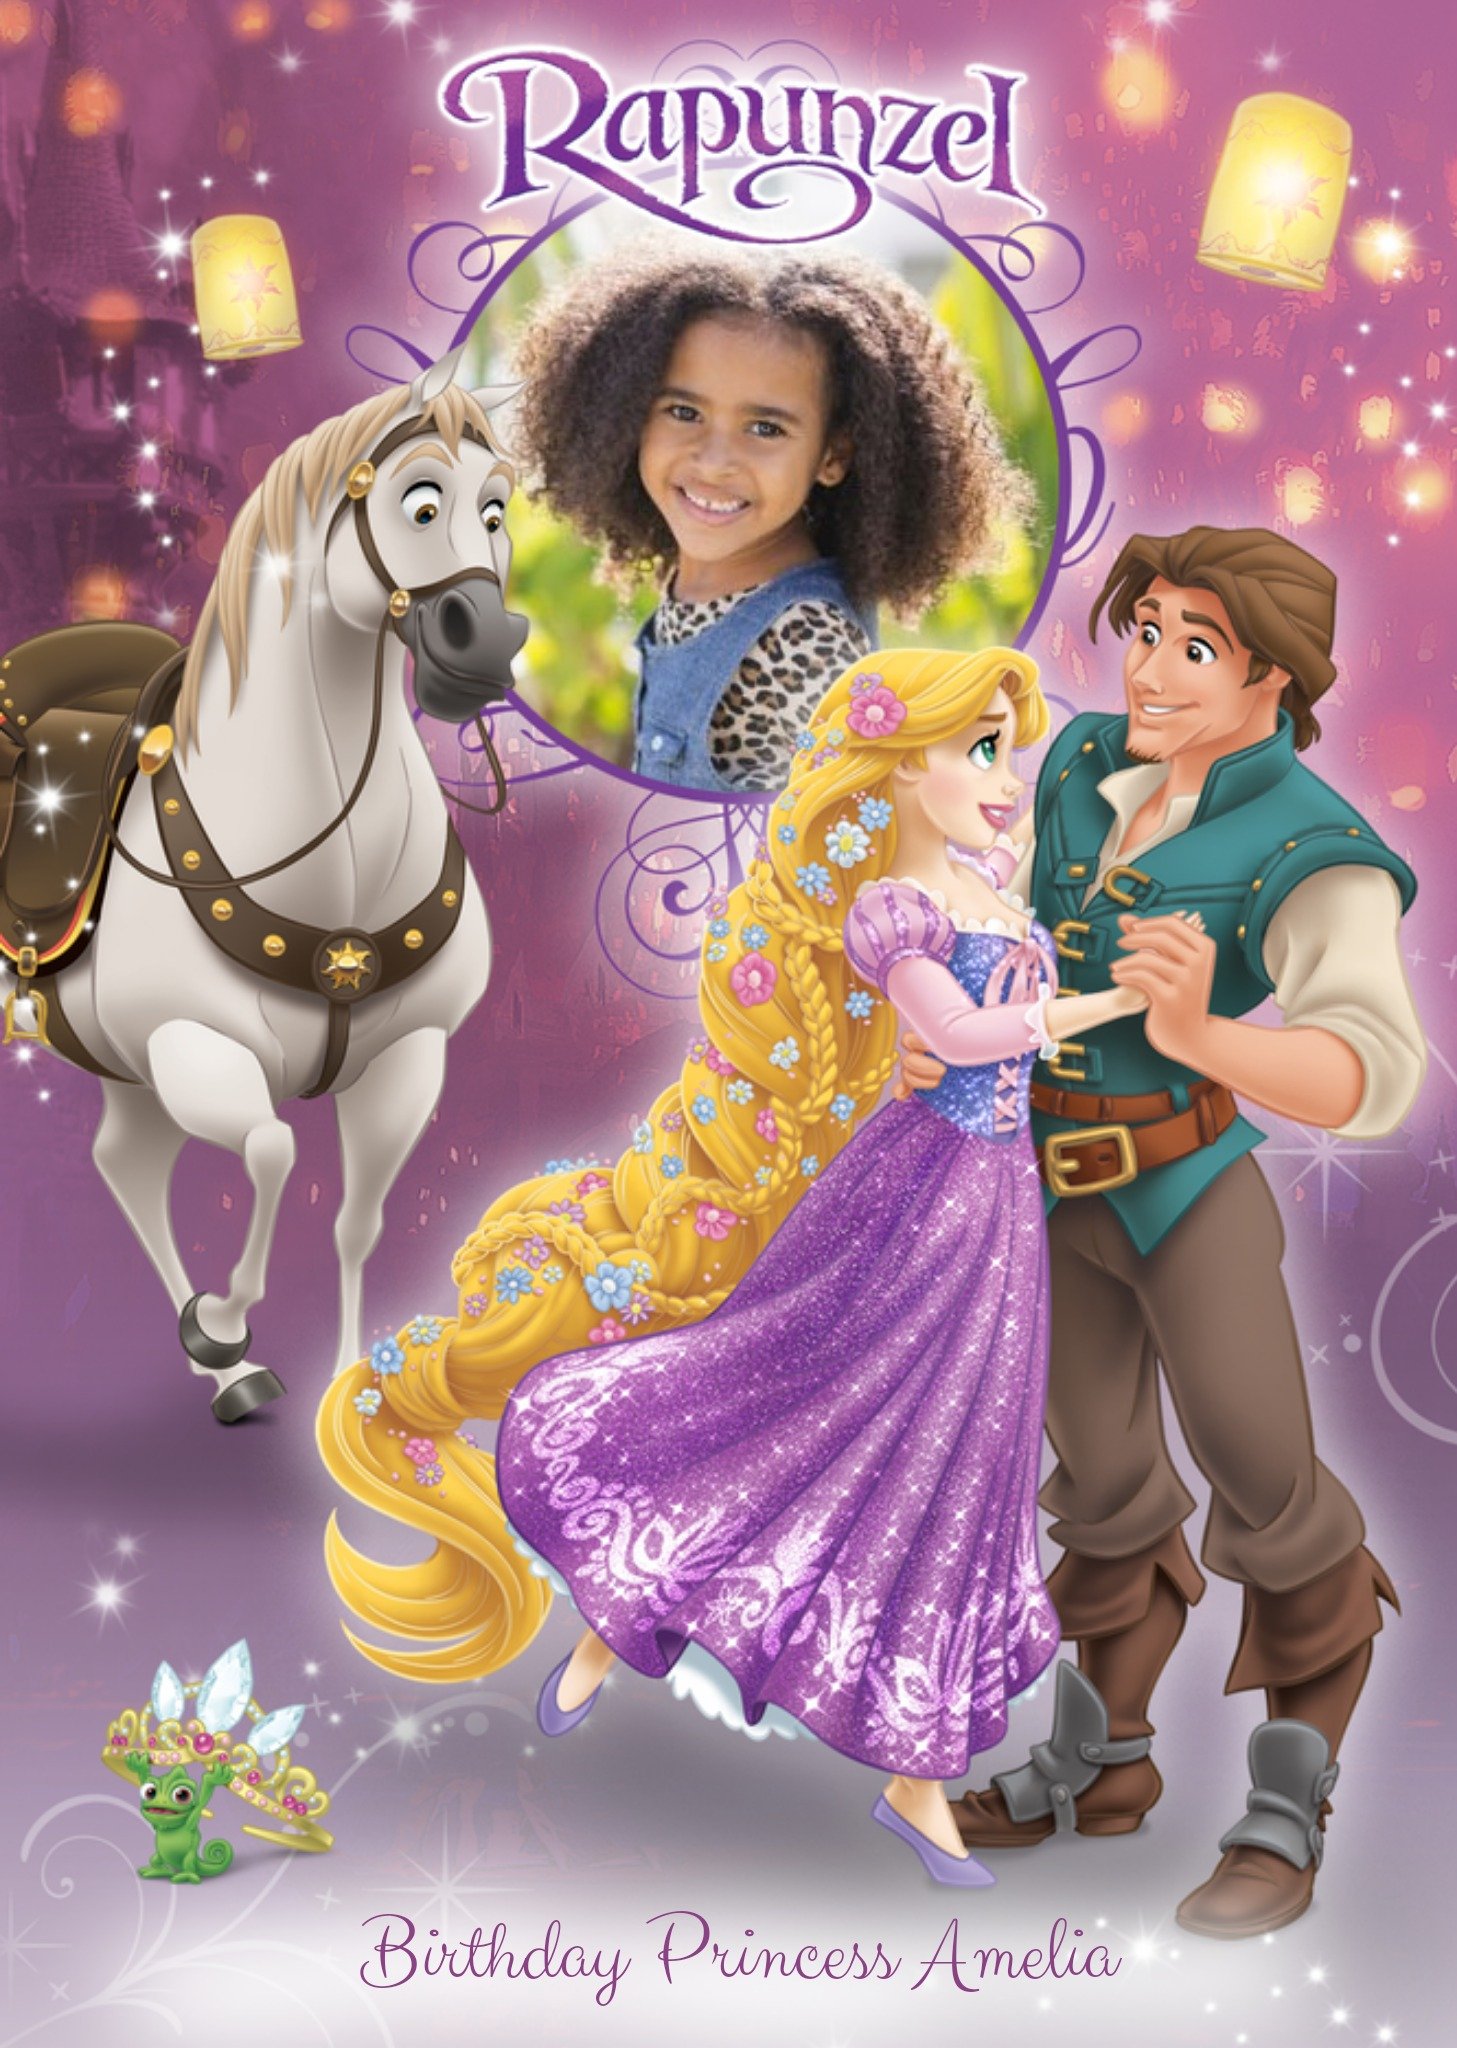 Disney Rapunzel Birthday Princess Photo Card, Large